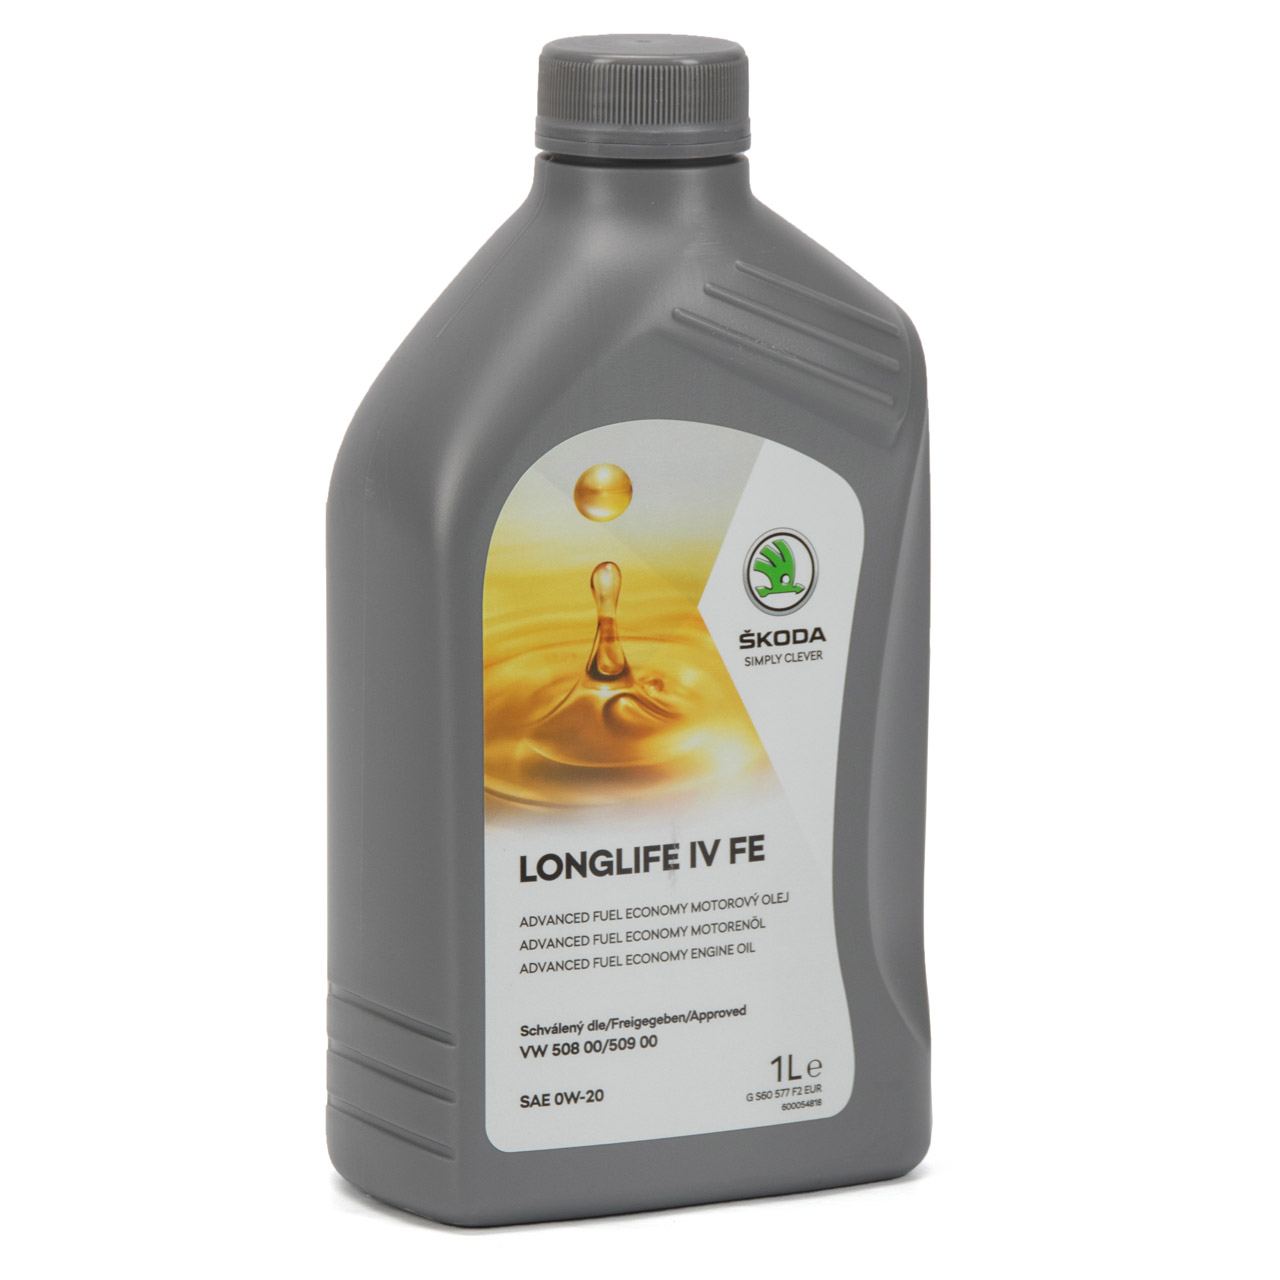 5 Liter ORIGINAL SKODA Motoröl Öl 0W20 LONGLIFE IV FE 508.00 509.00 GS60577F2